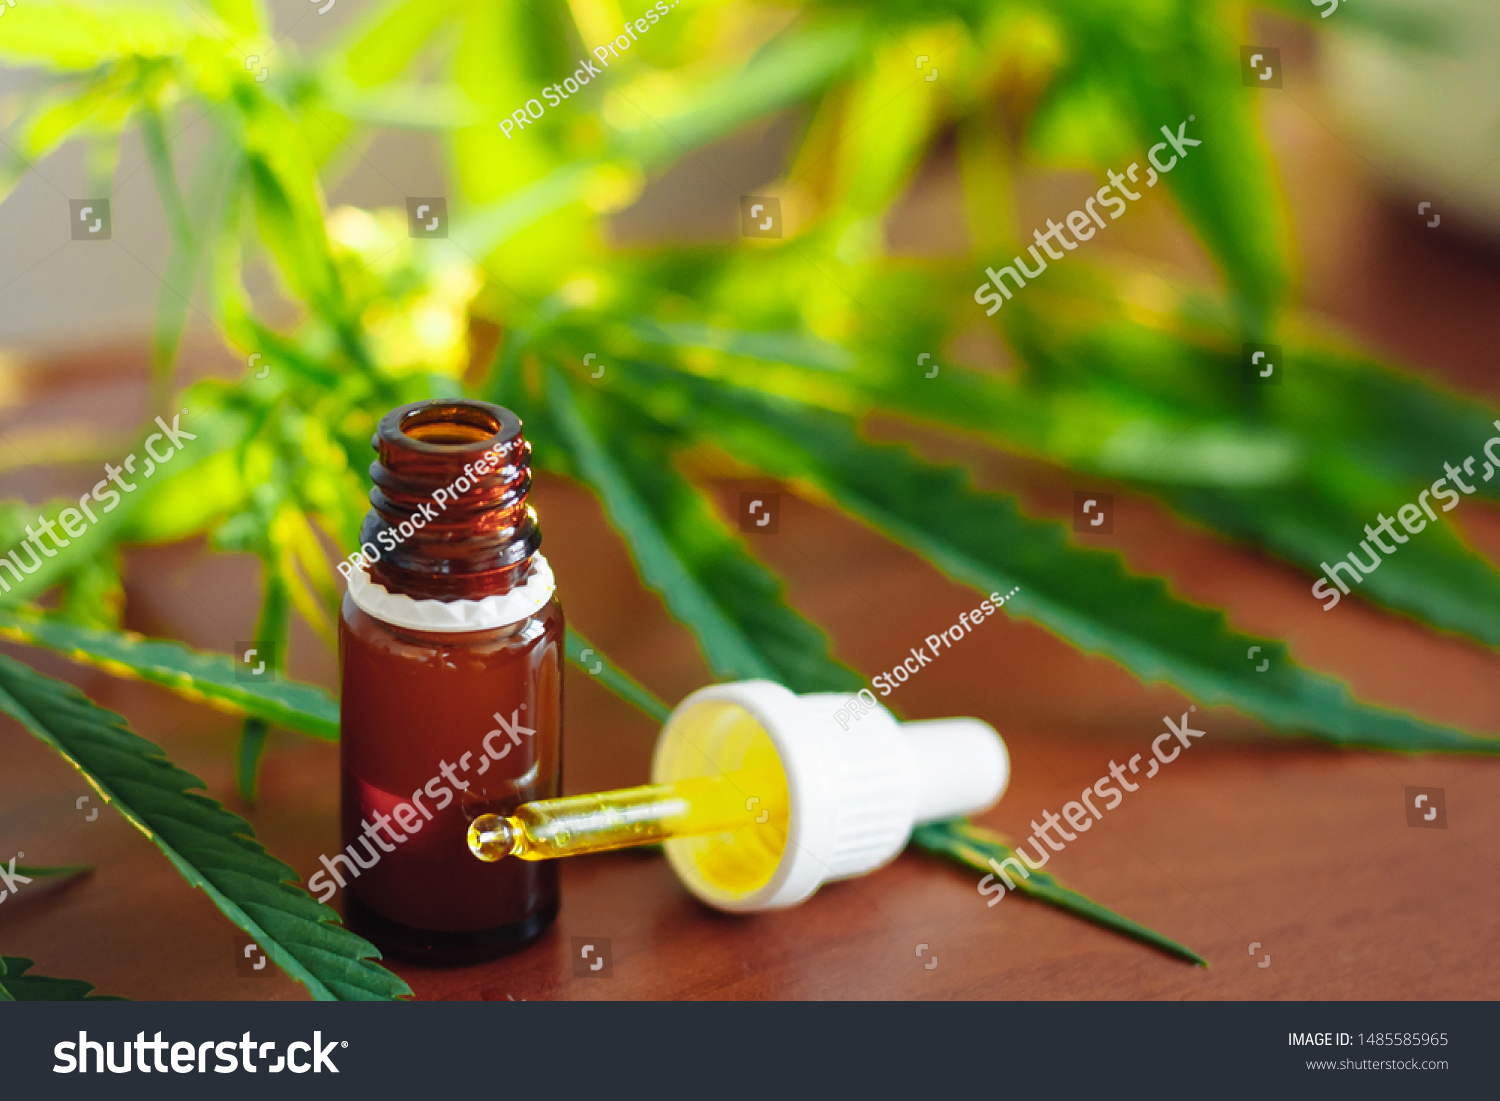 CBD oil cannabis extract. Hemp oil bottles and hemp flowers on wooden table. Medical cannabis concept. CBD Extract Tincture Liquid Dripping  #1485585965